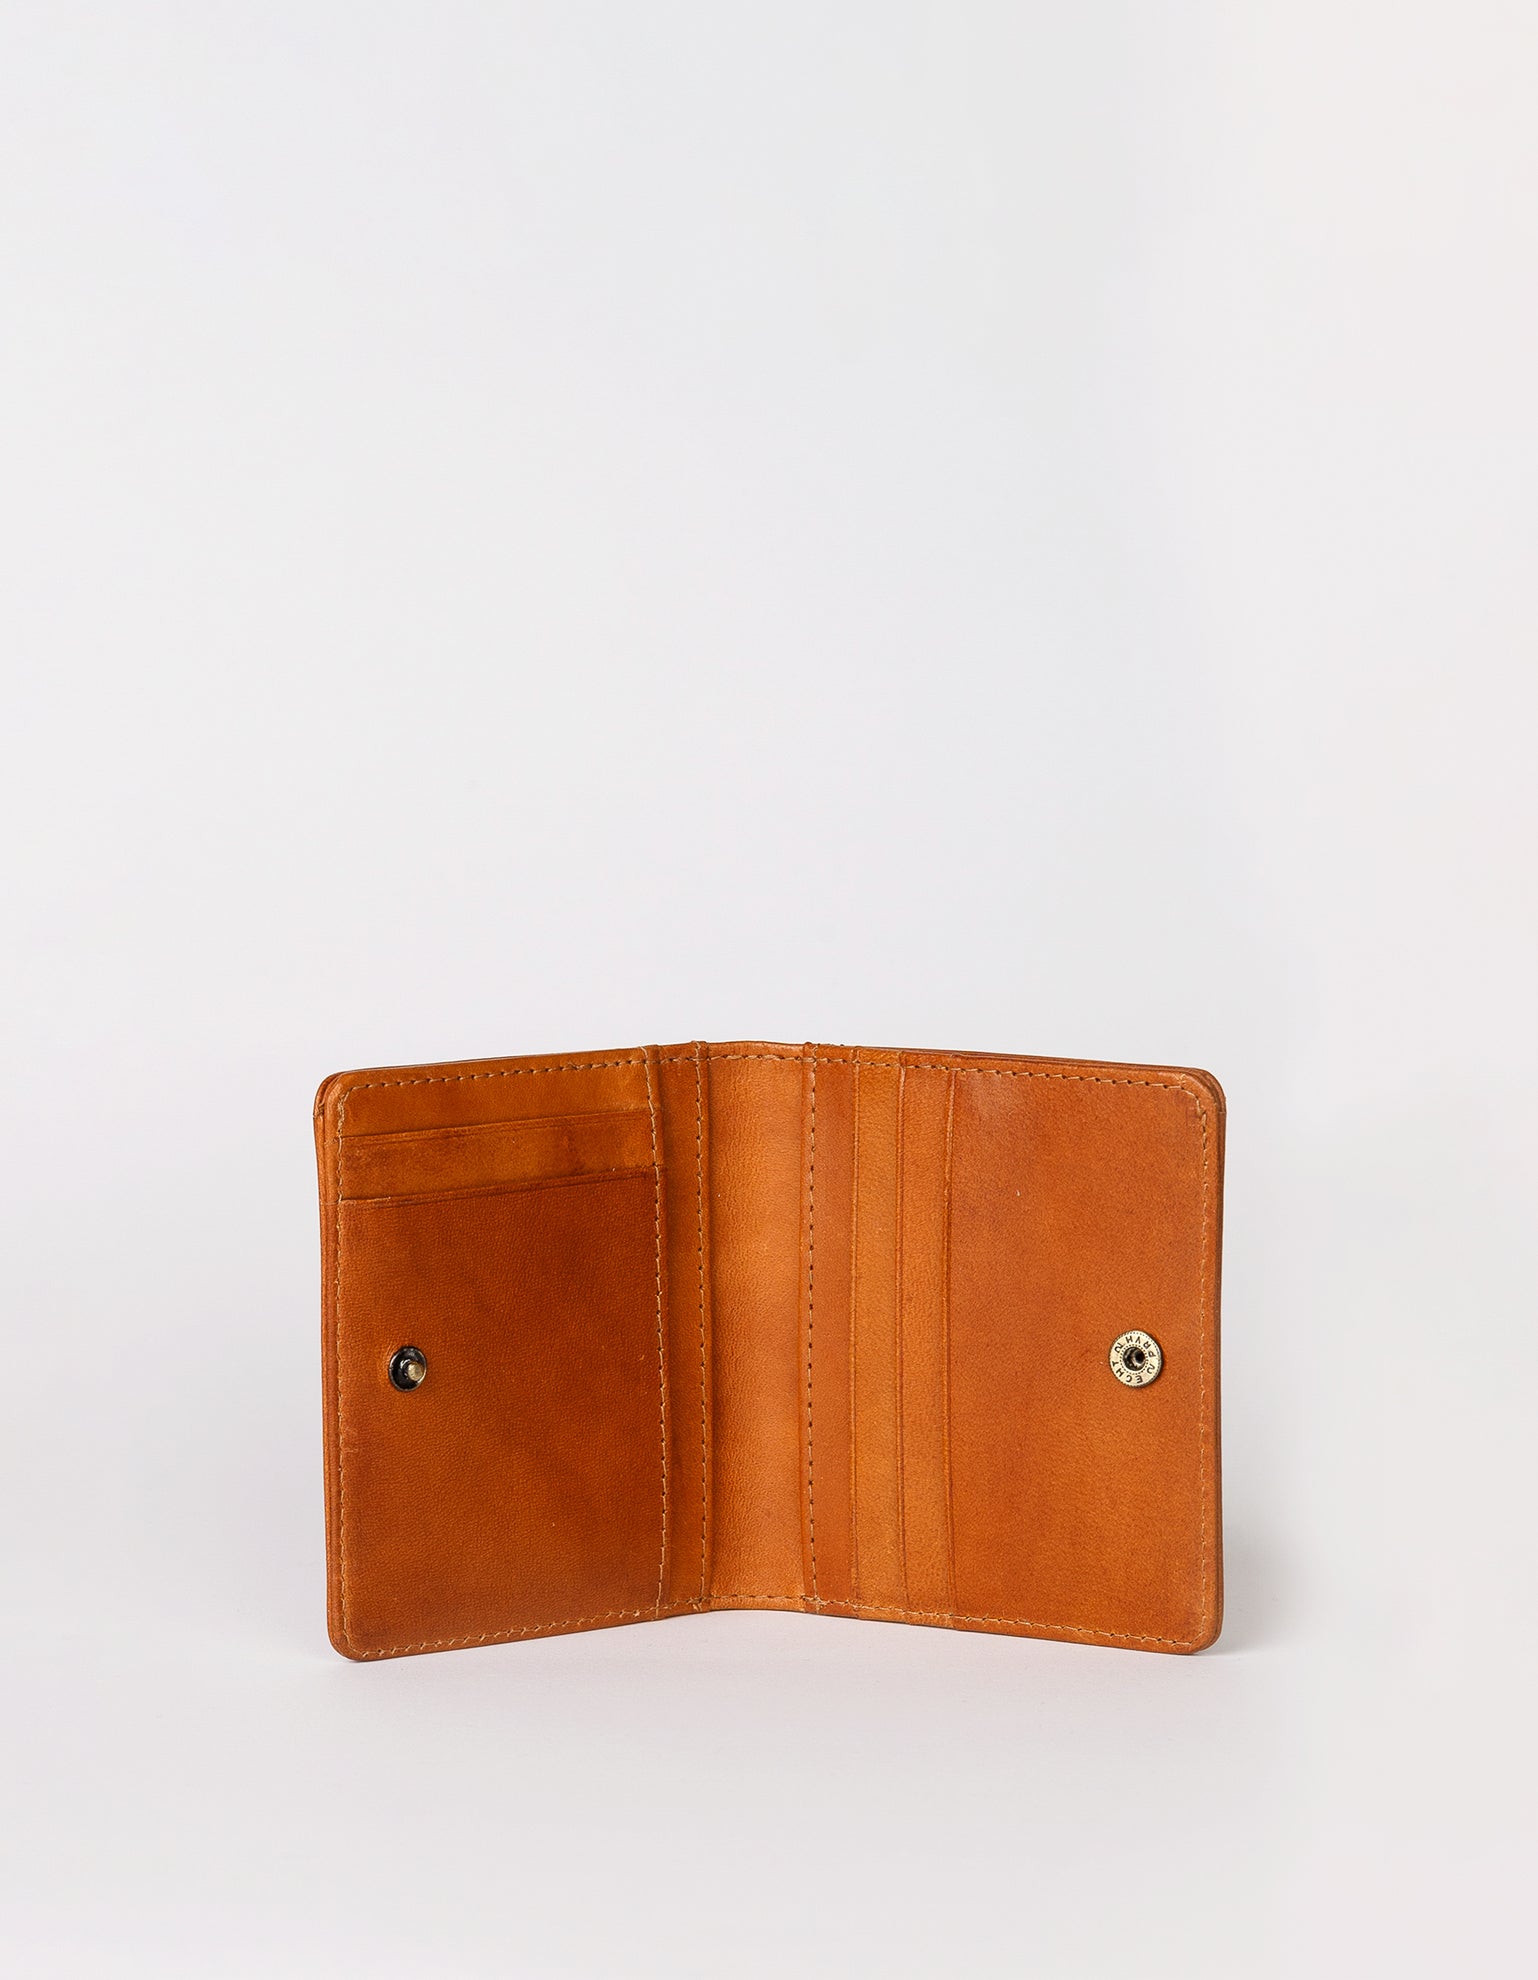 Alex's Fold-over Wallet Classic Leather cognac colour. Medium size, square shaped wallet, inside image